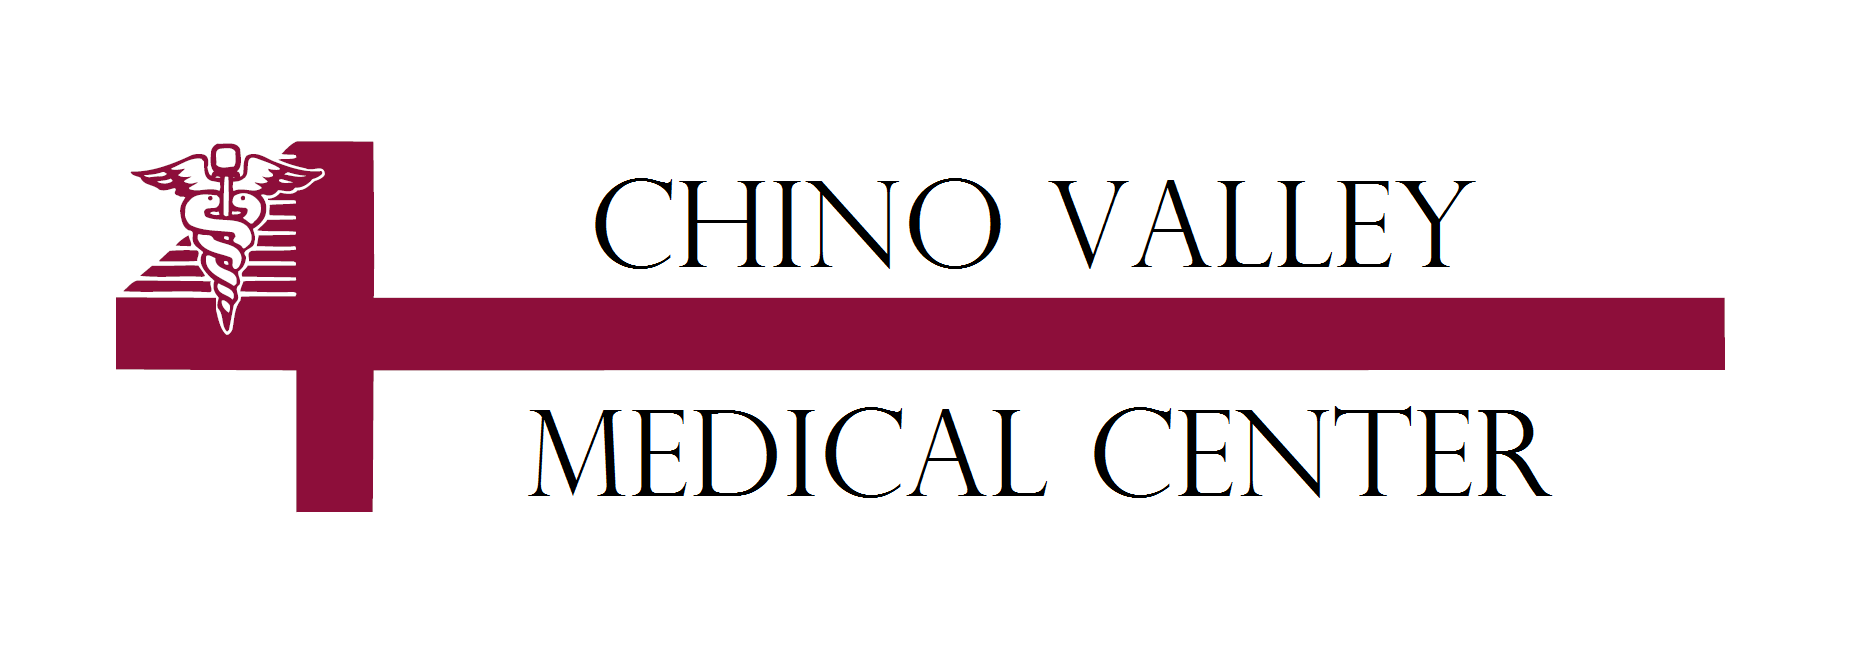 02 chino valley medical center